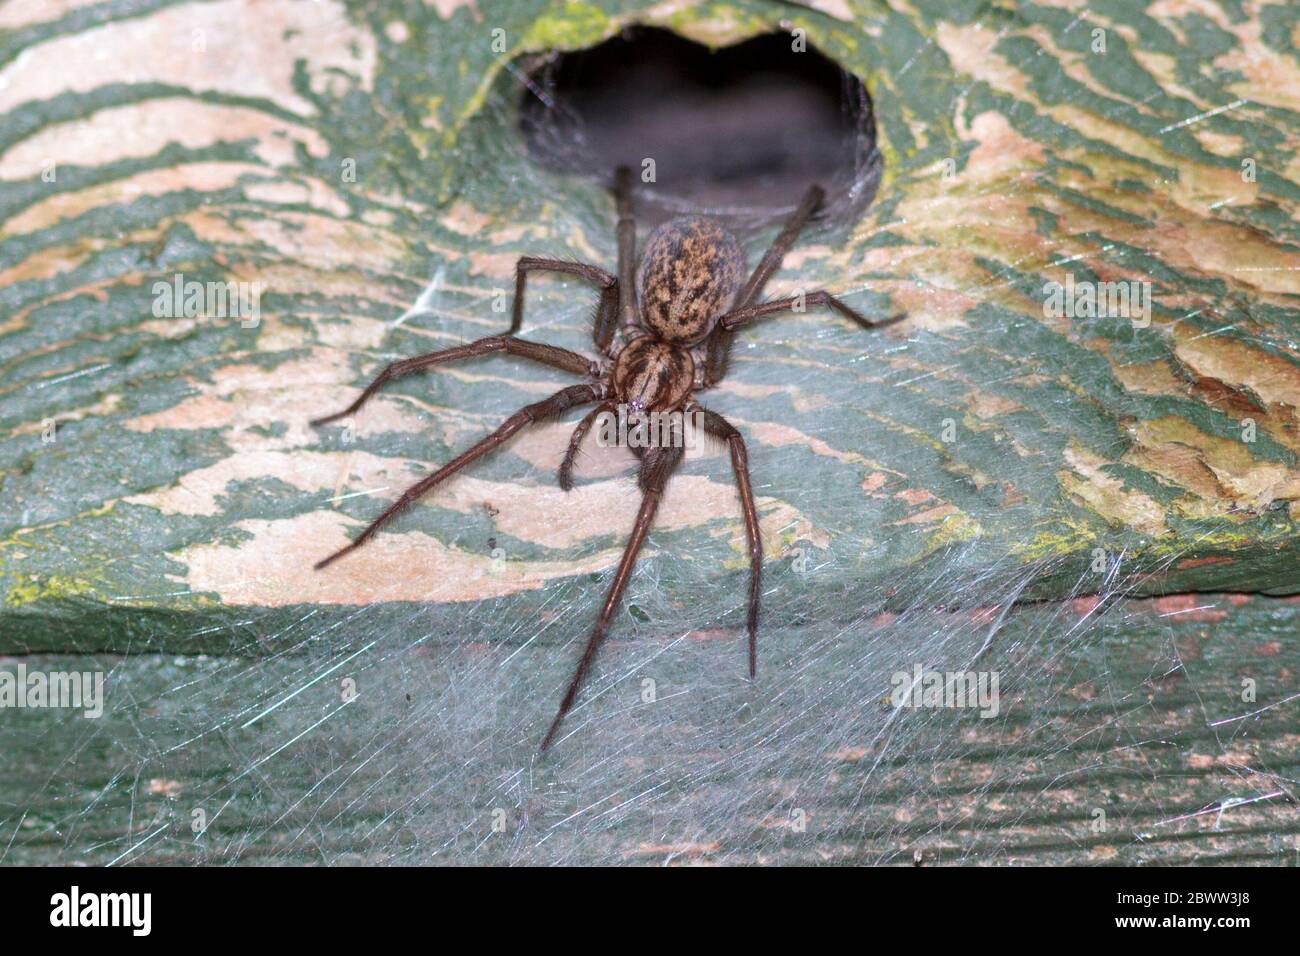 Giant house spider (Eratigena atrica) UK garden Stock Photo